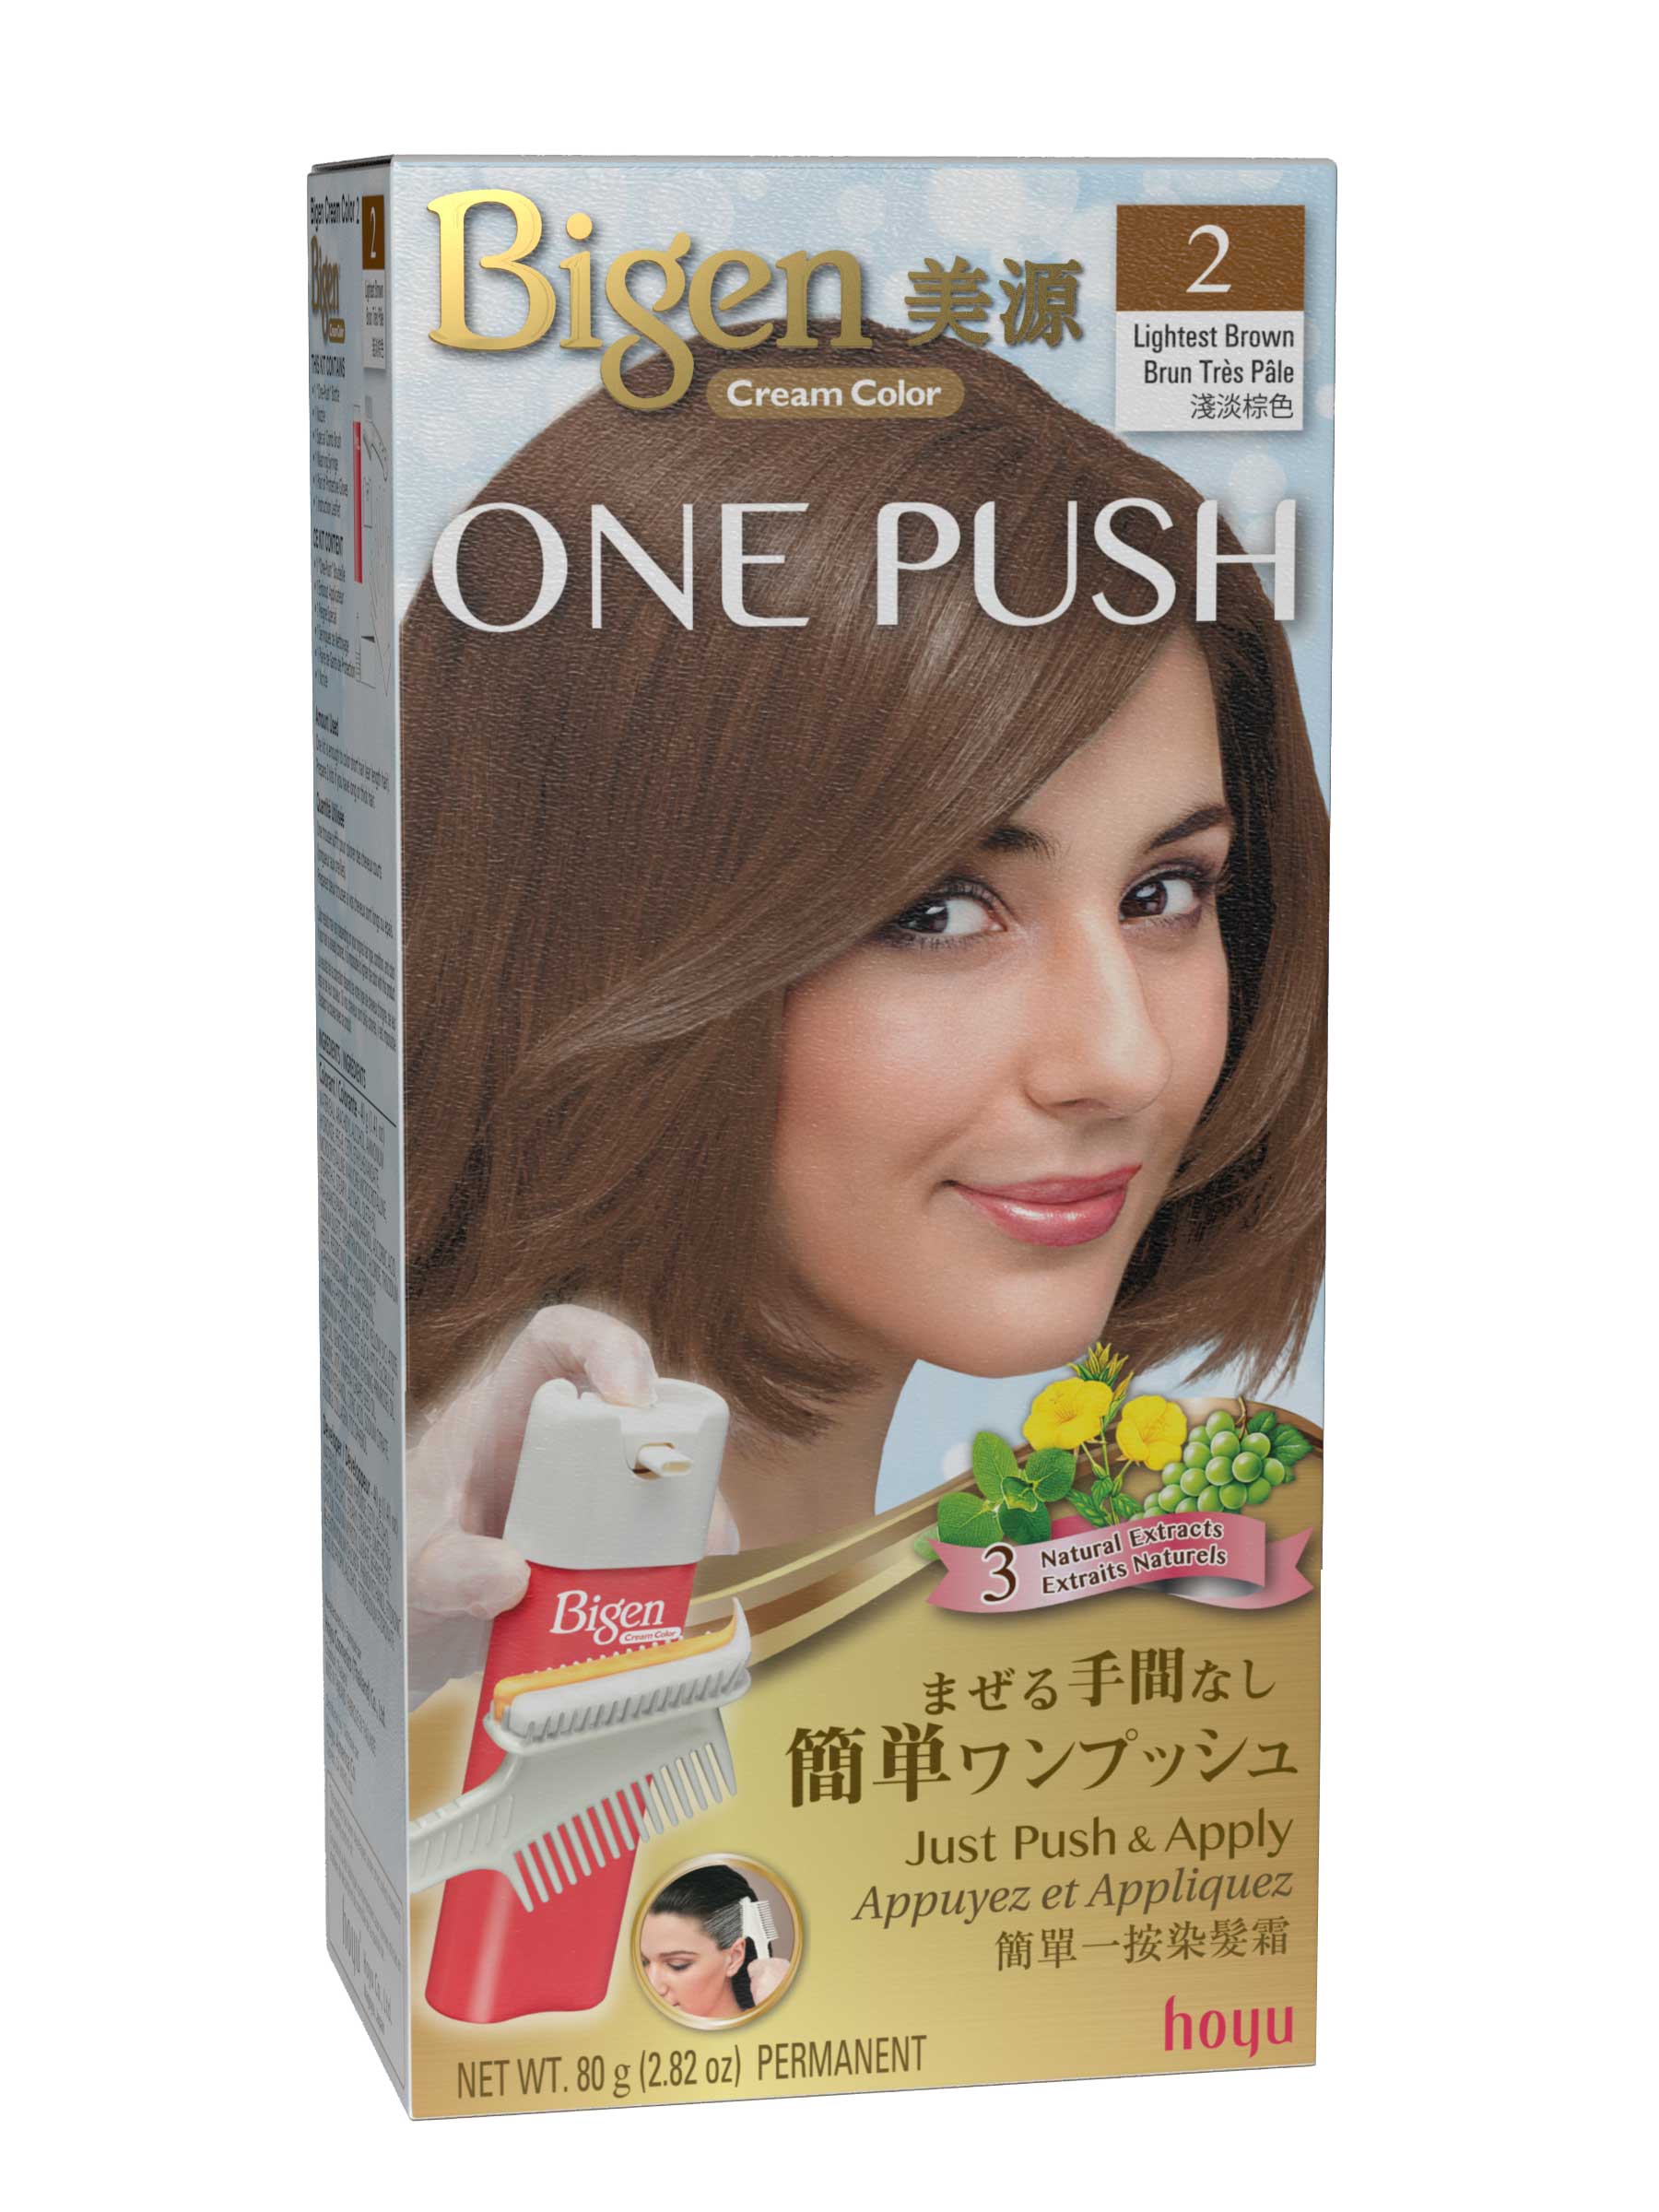 2-One Push